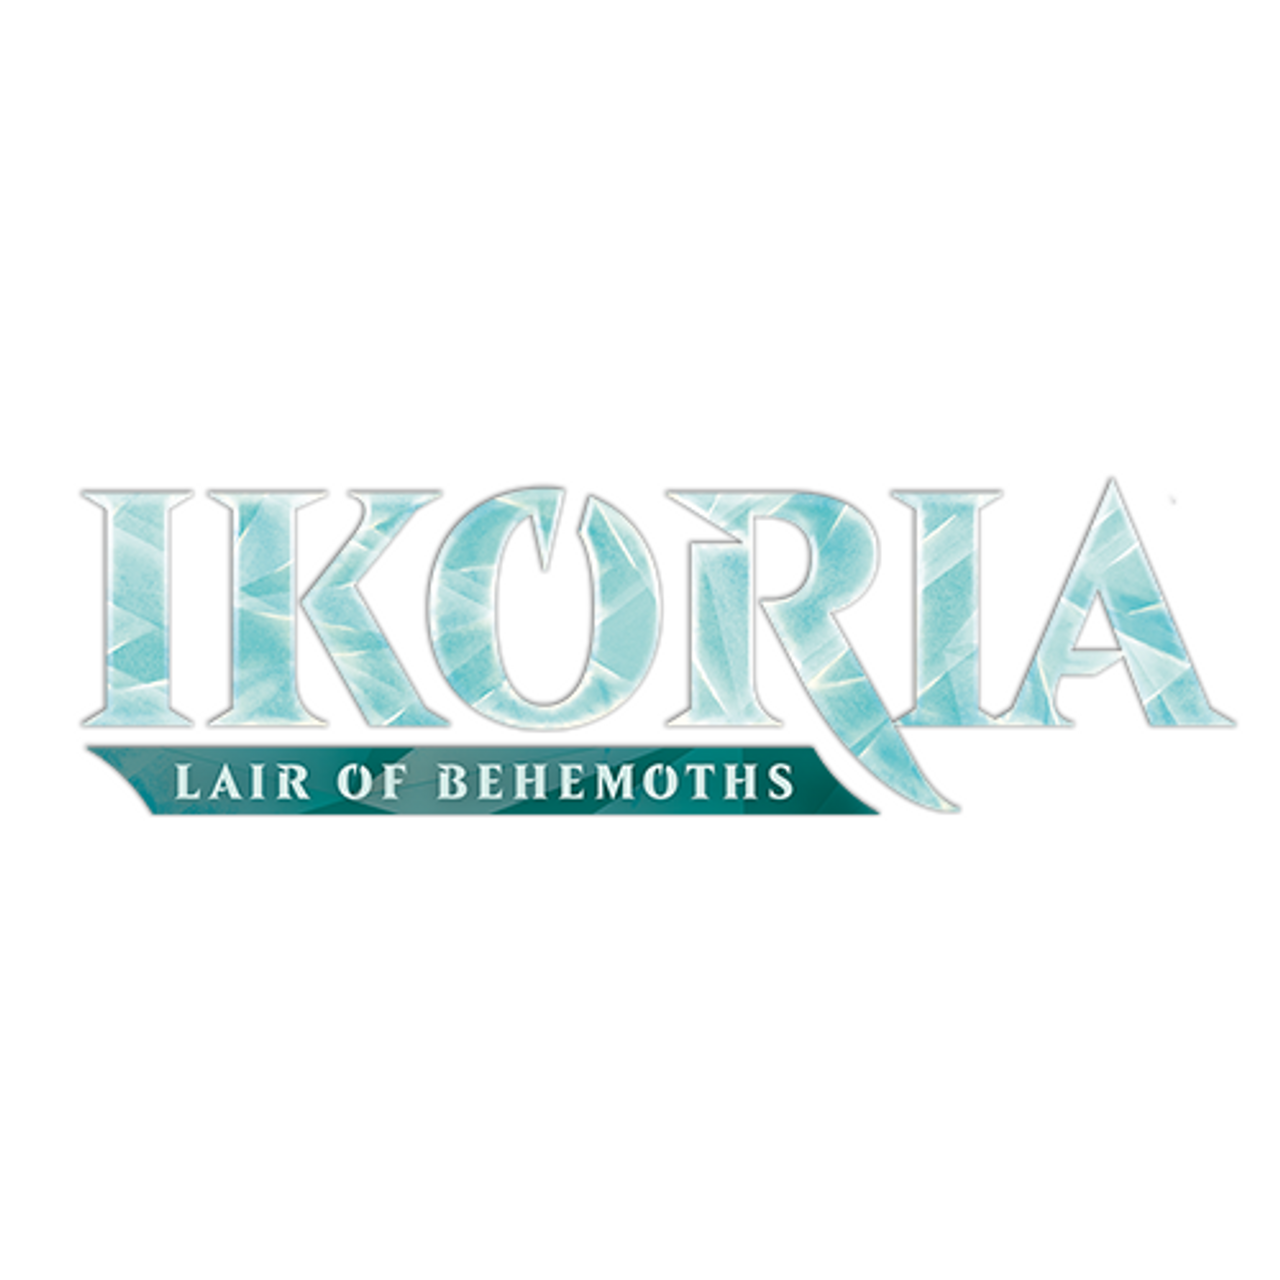 Ikoria: Lair of Behemoths